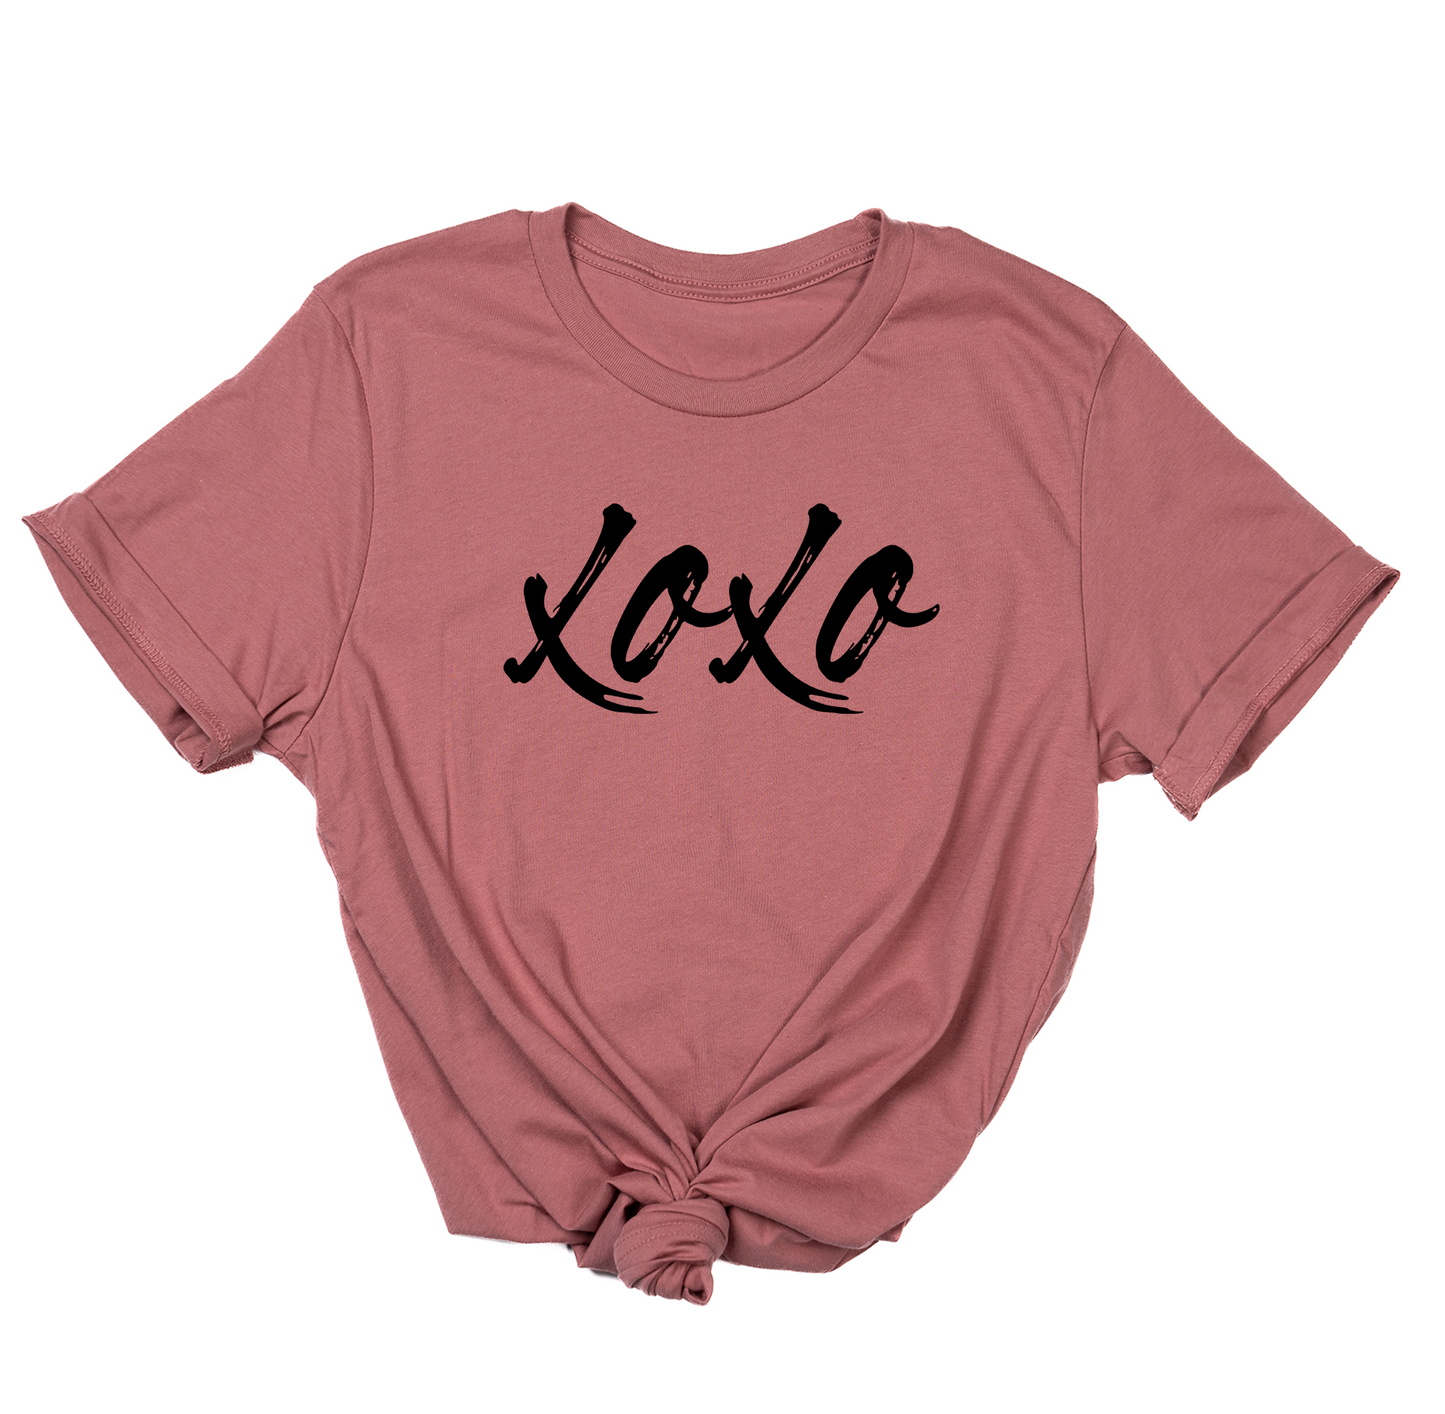 XOXO (Handwritten,  Across Front) - Tee (Mauve)